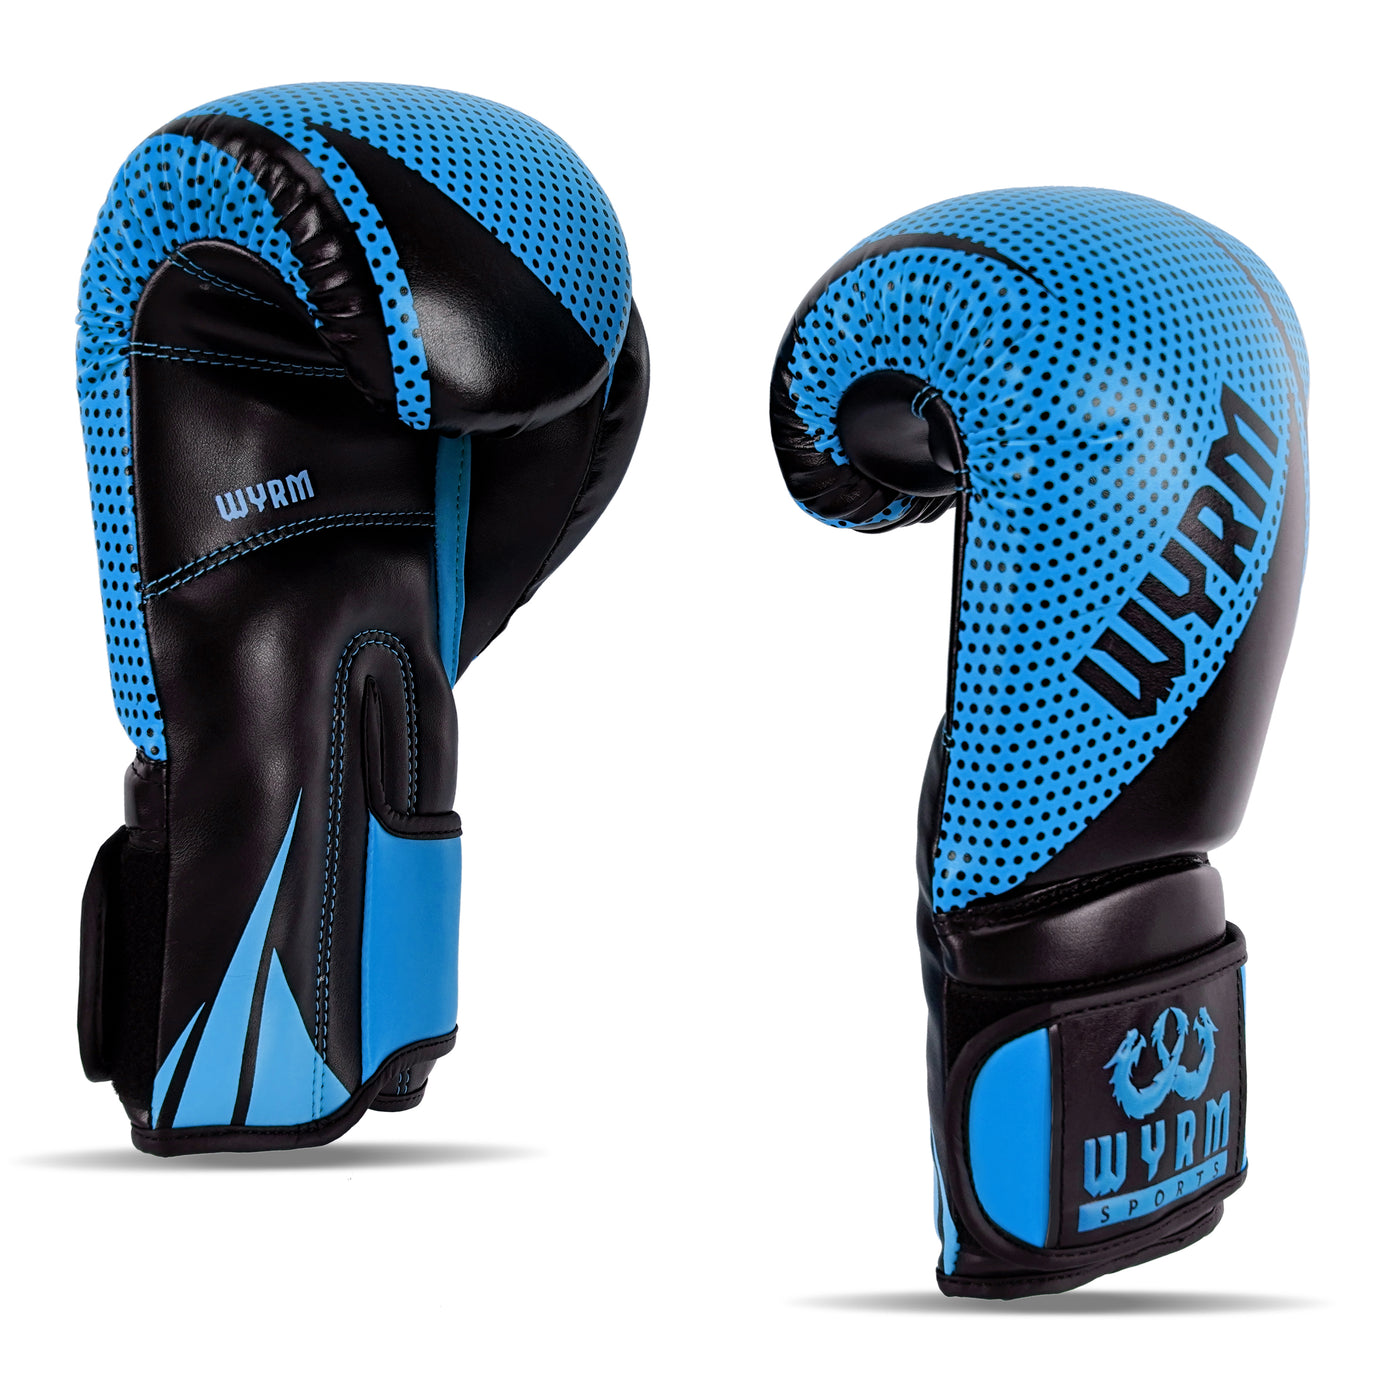 Krusher Blue/Black Leather Boxing Gloves